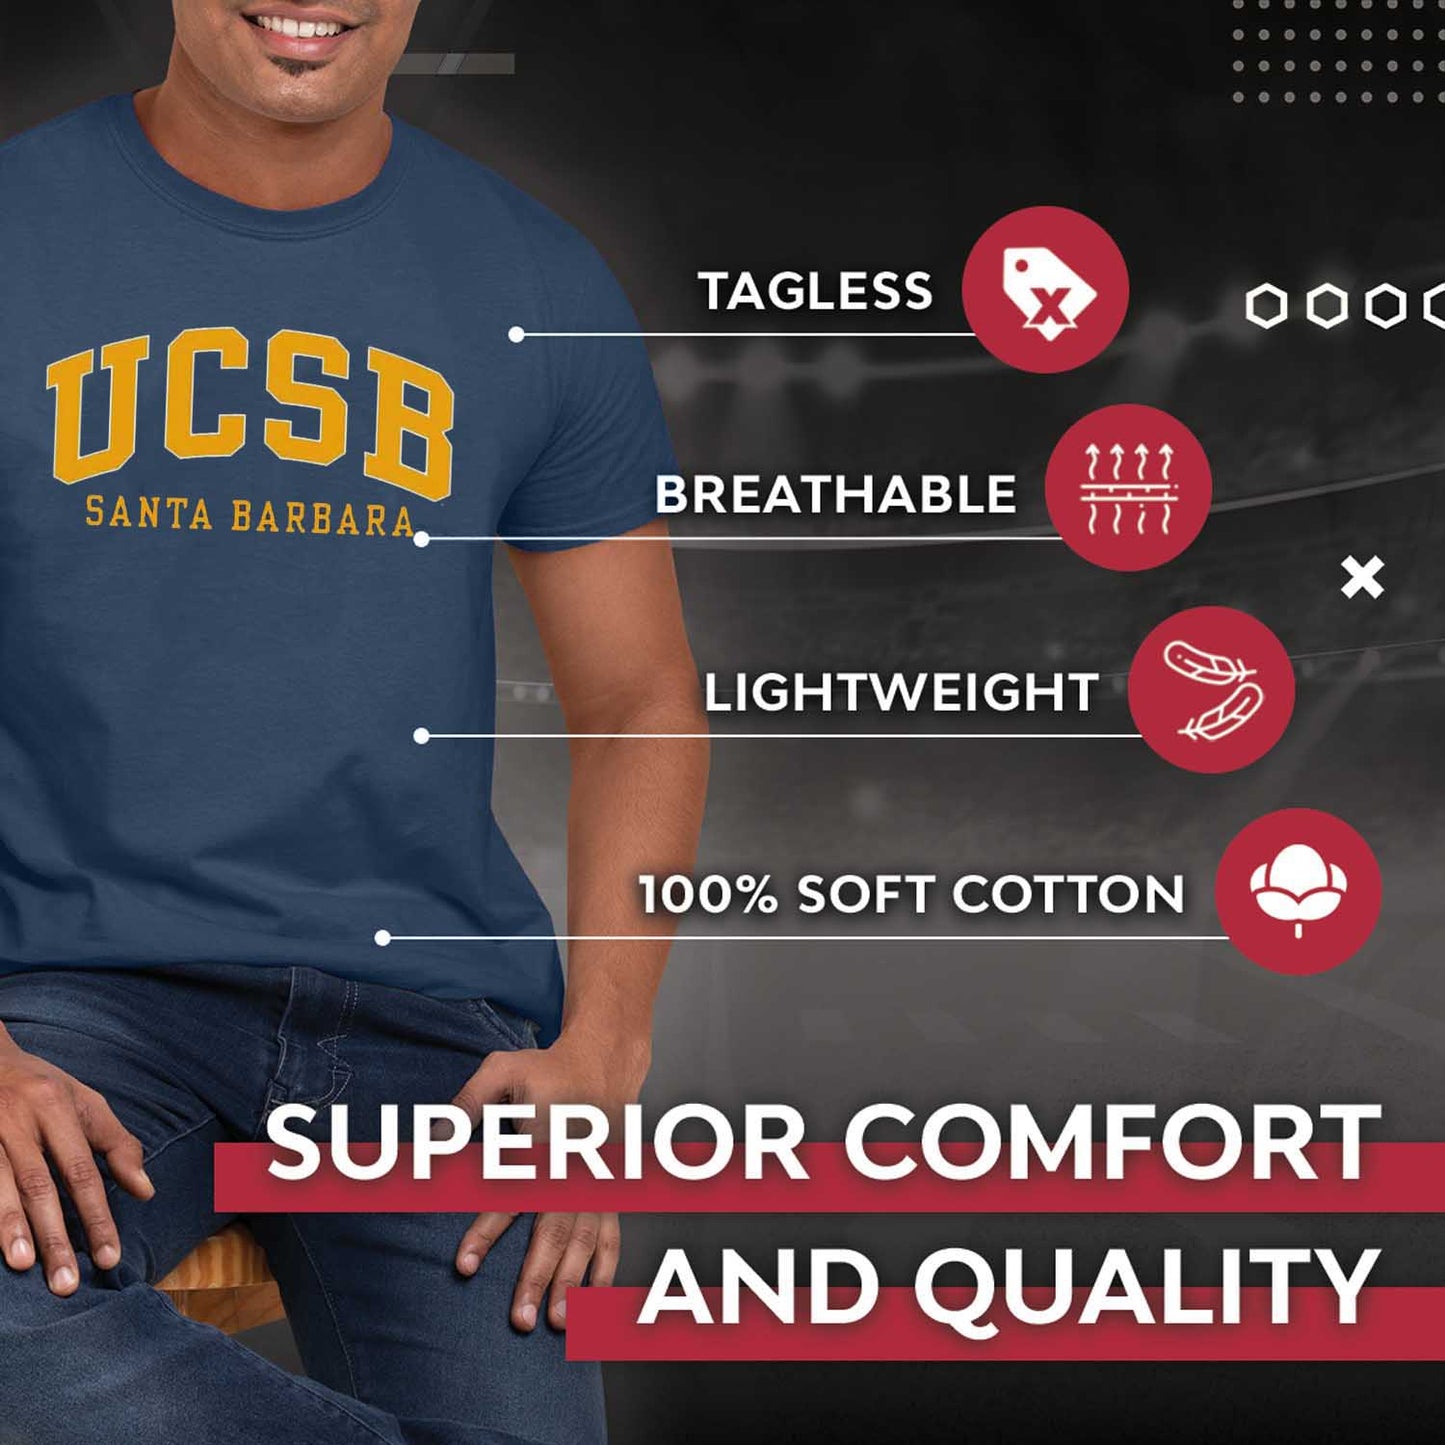 UCSB Gauchos NCAA Adult Gameday Cotton T-Shirt - Navy